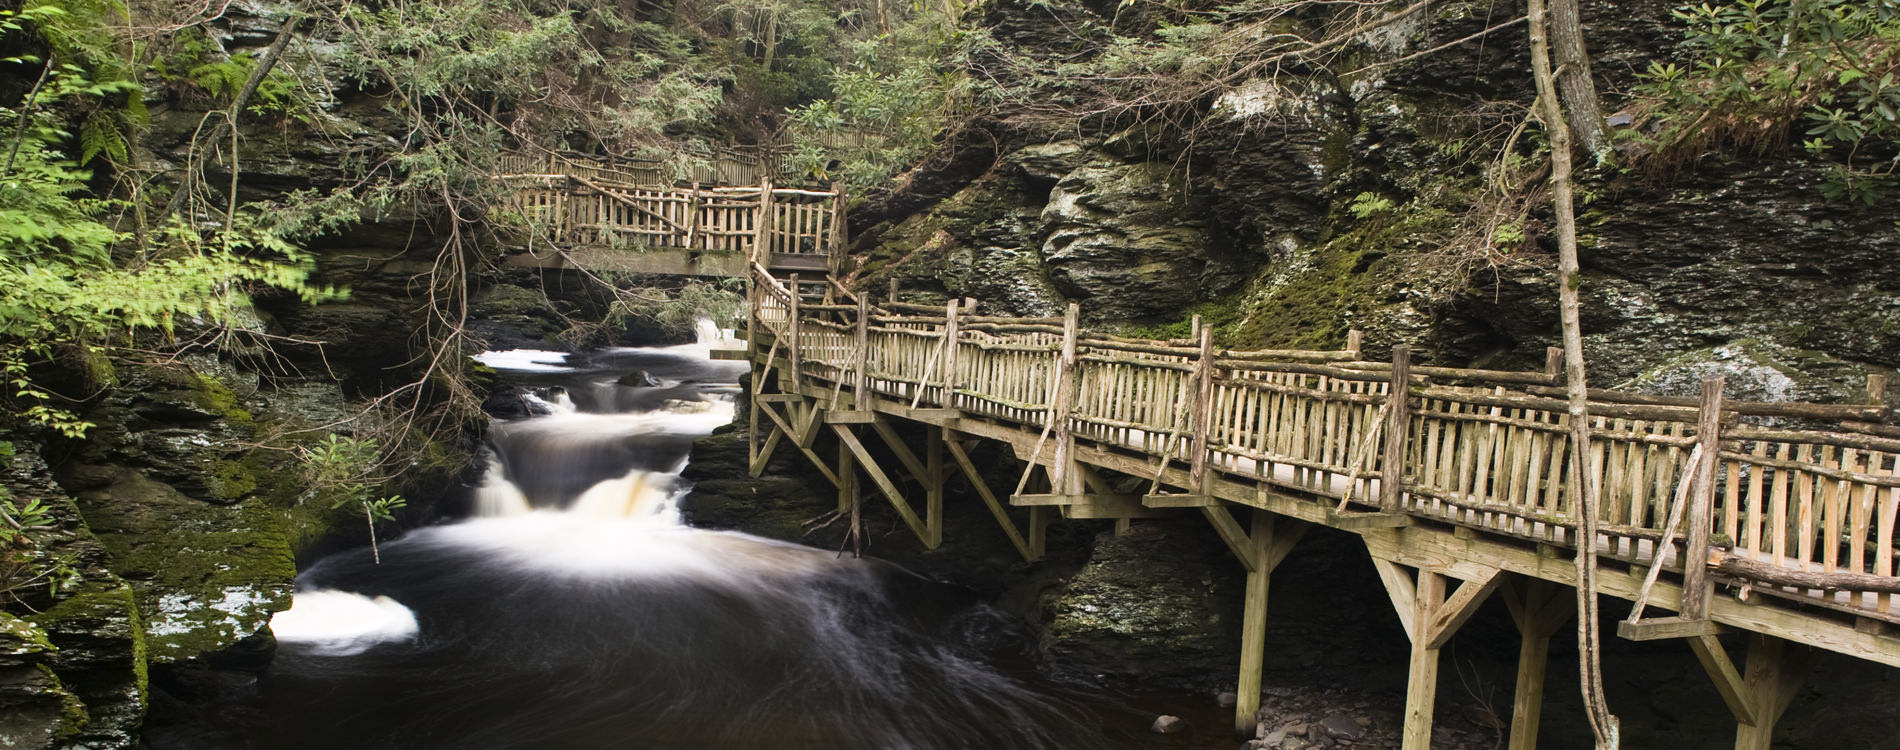 Bushkill Falls Footbridge in the Poconos Pennsylvania